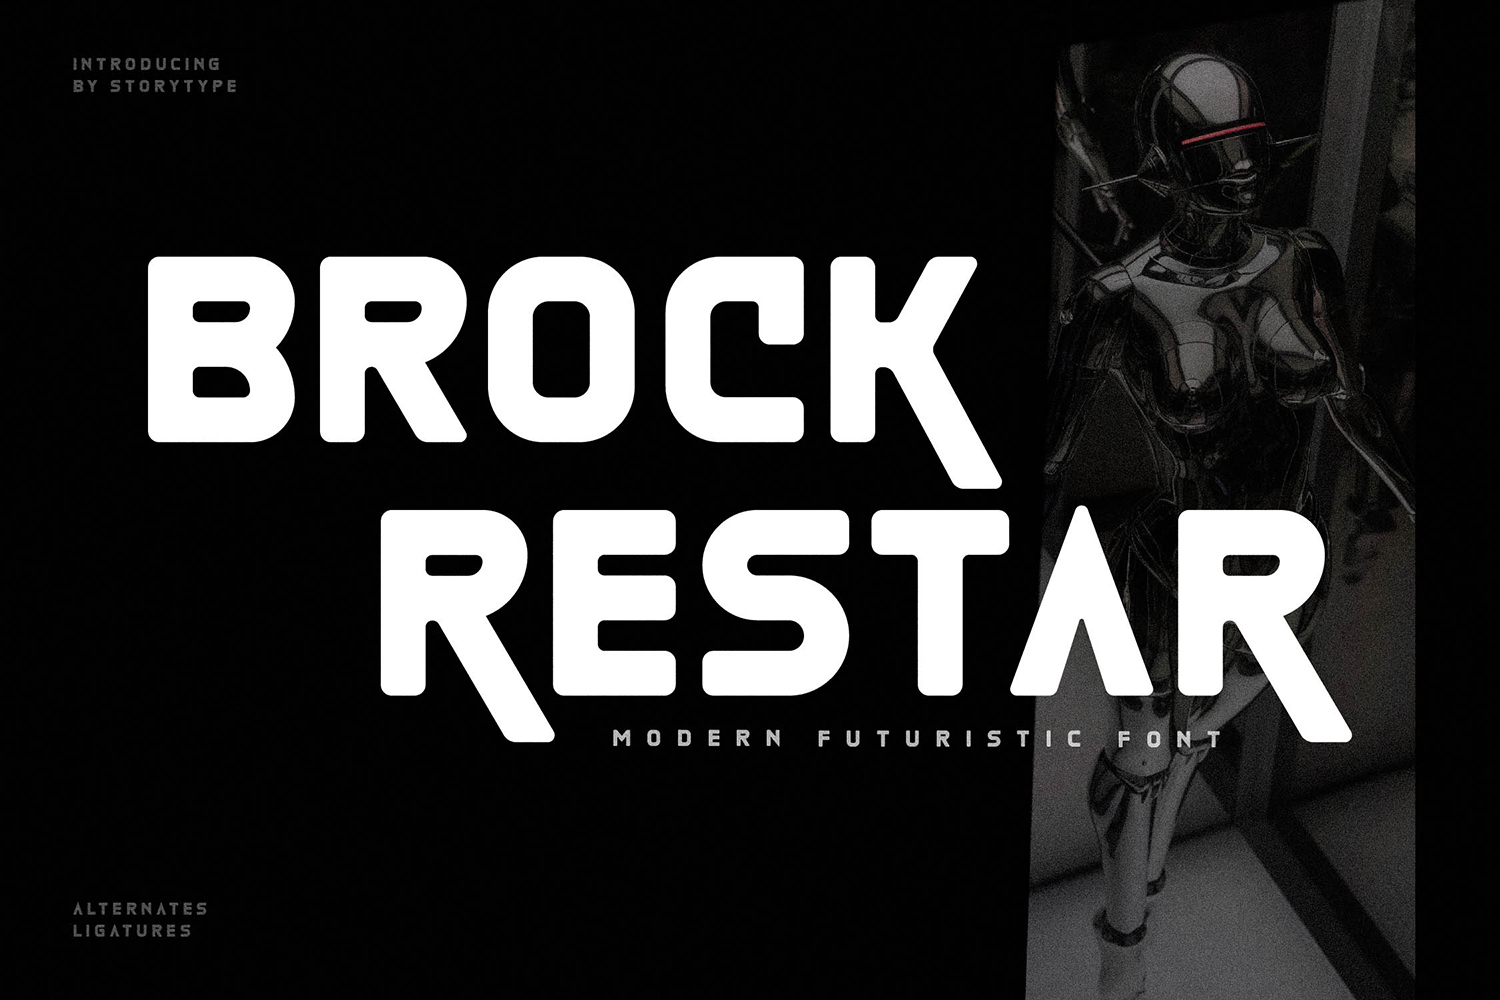 Brock Restar Free Font